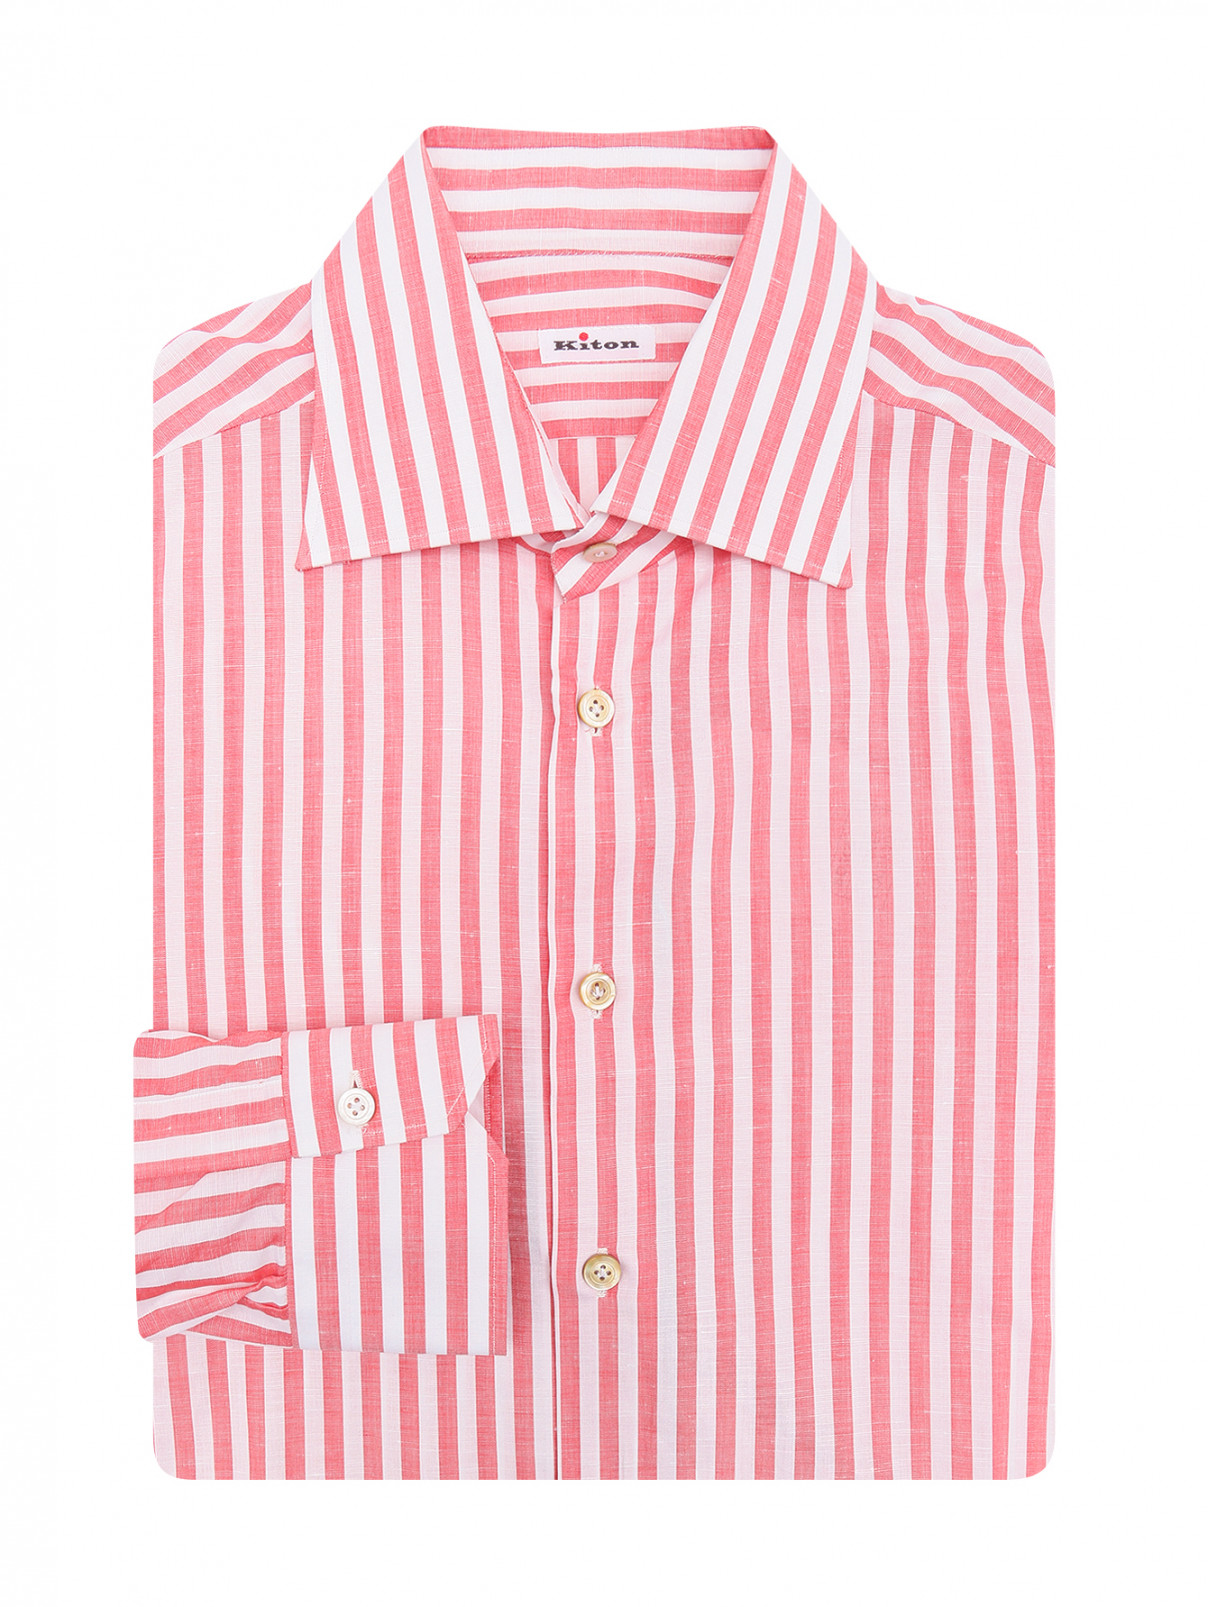 Рубашка из хлопка с узором Kiton  –  Общий вид  – Цвет:  Узор